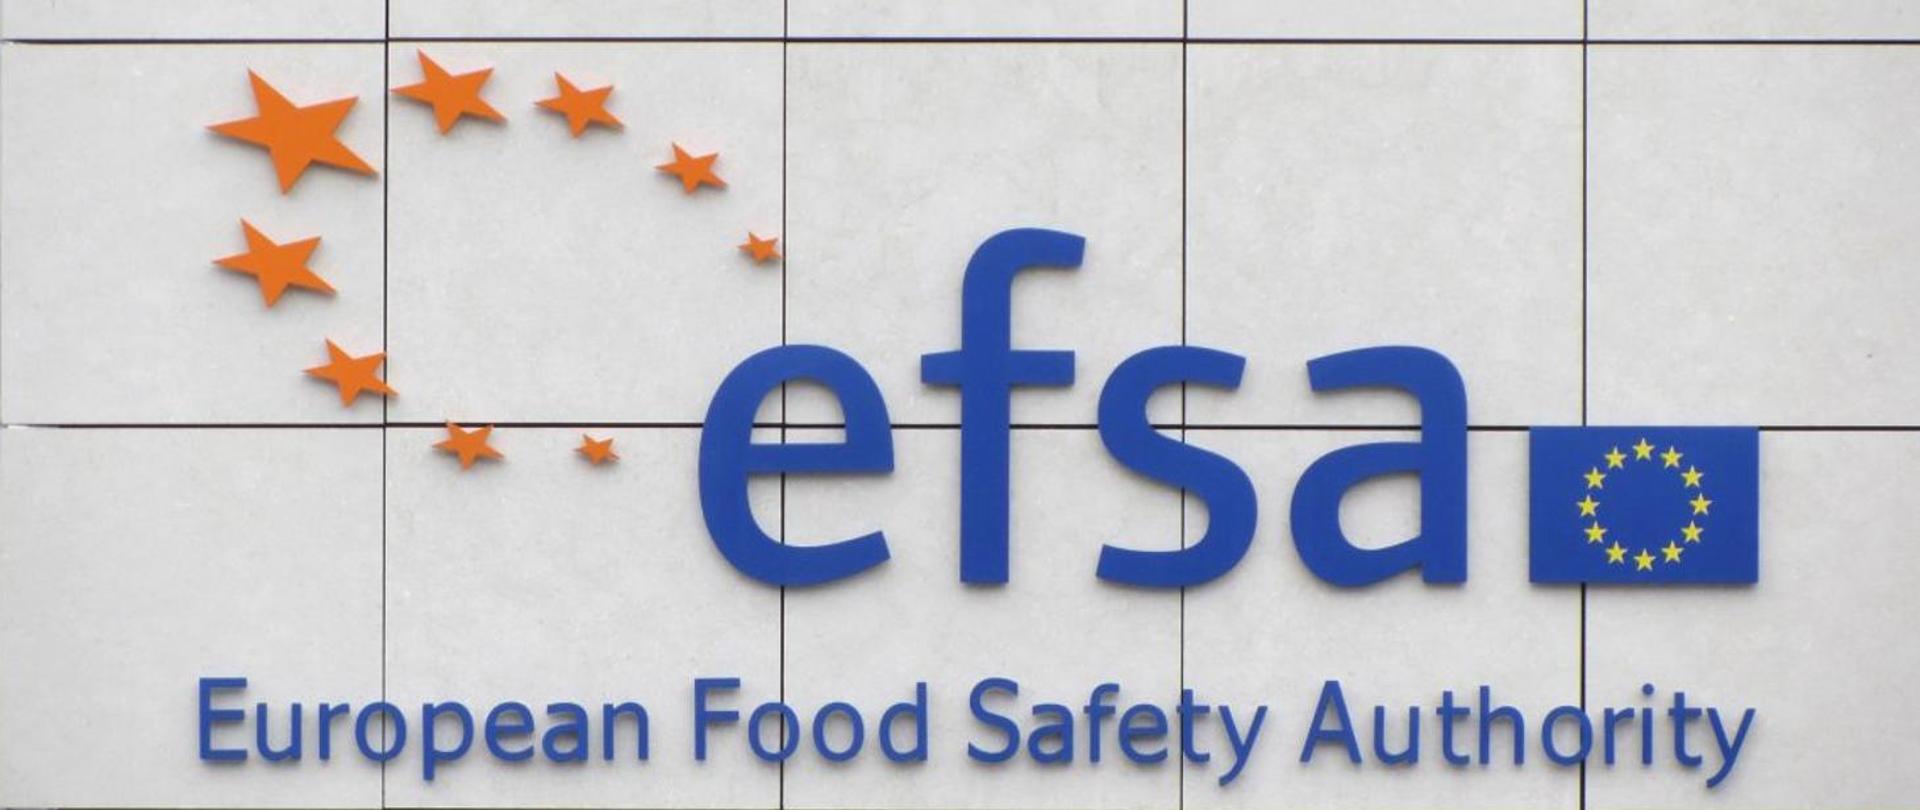 EFSA European Food Safety Authority